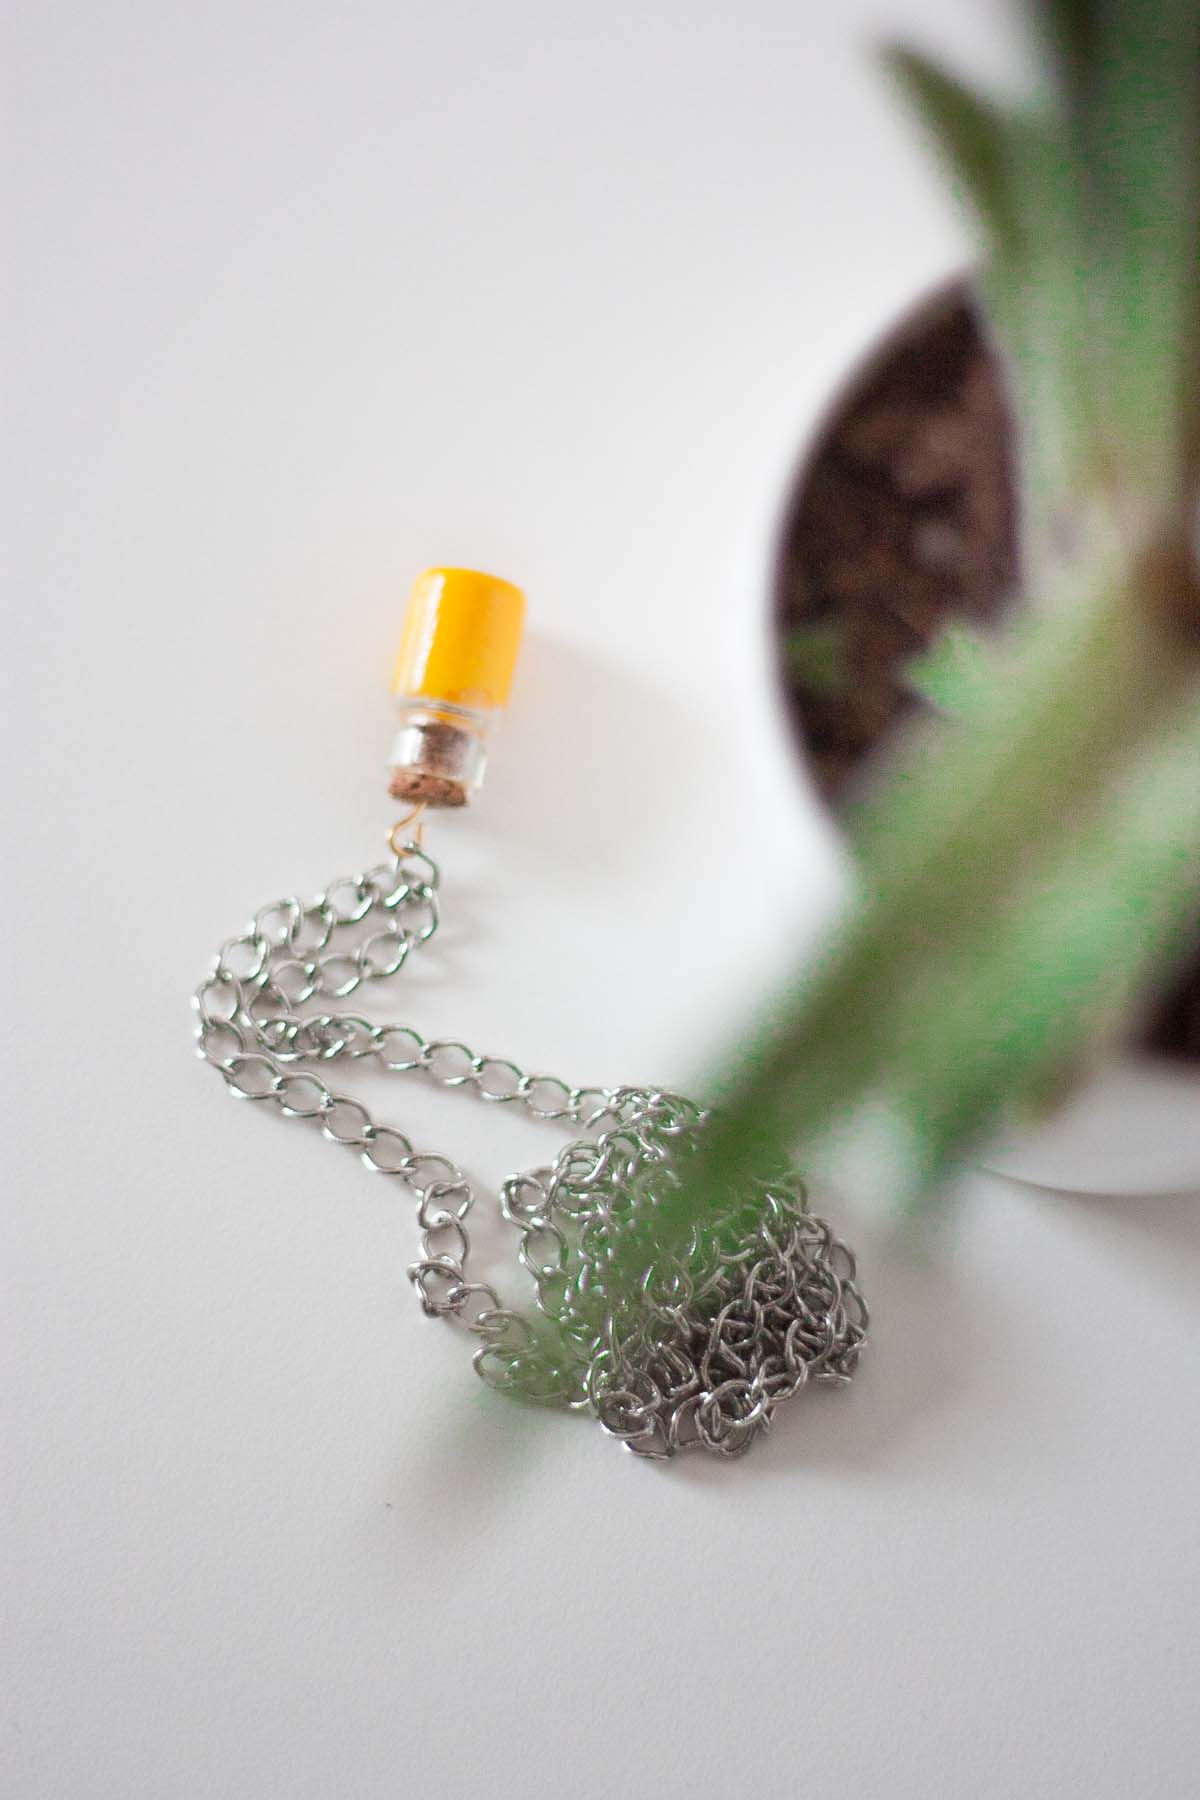 Diy mini bottle pendant necklace gift